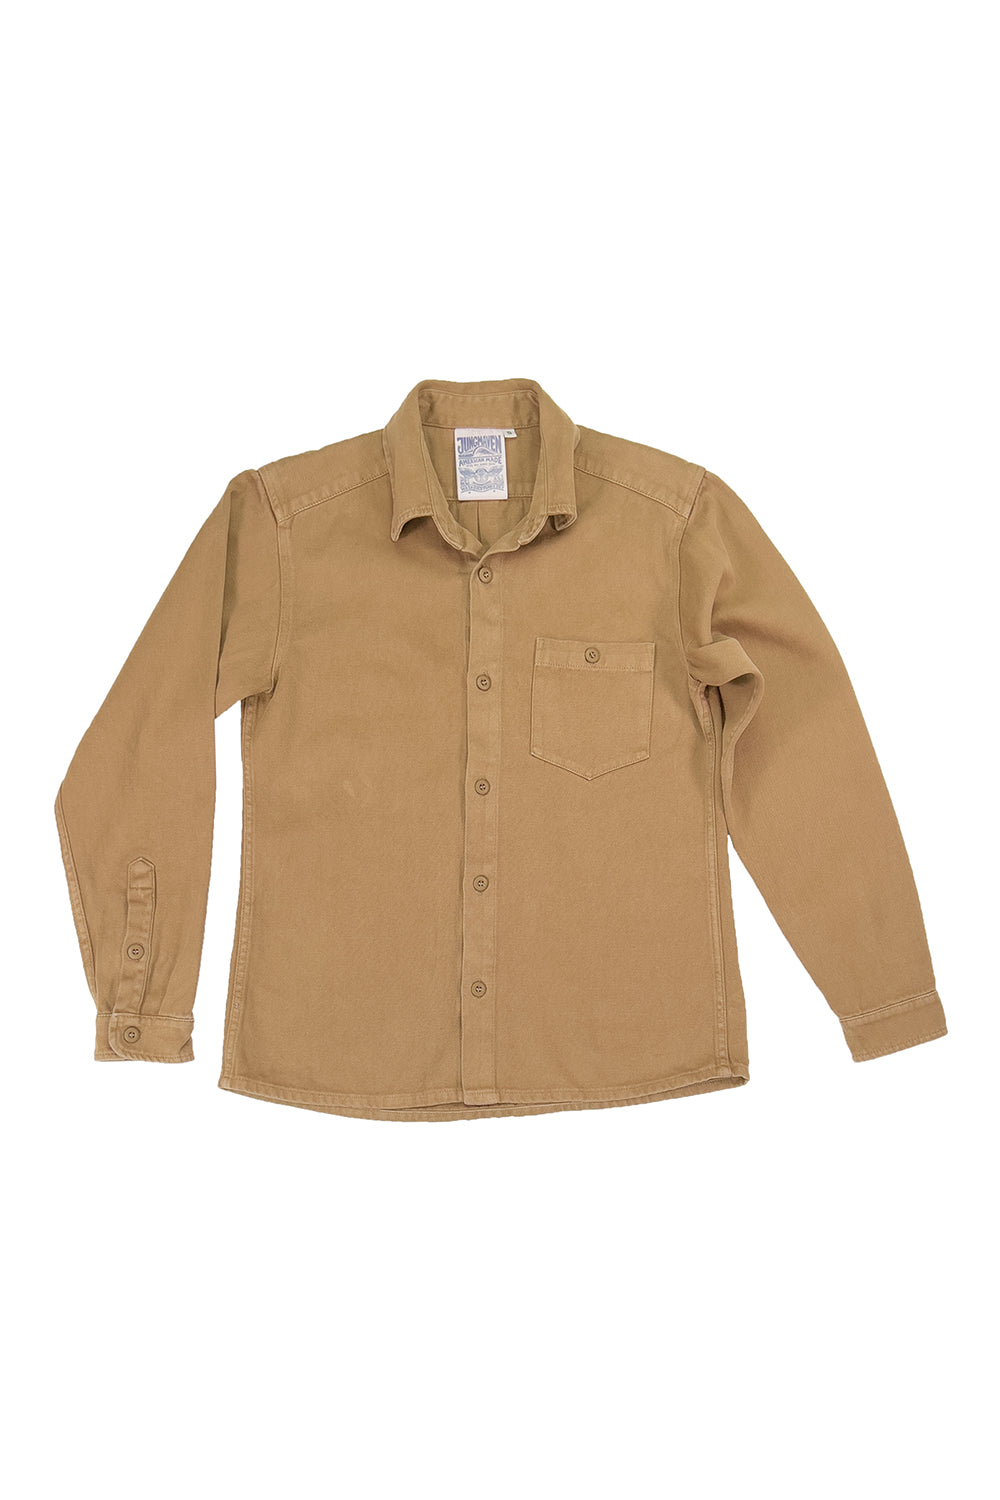 Topanga Shirt | Jungmaven Hemp Clothing & Accessories / Color: Coyote